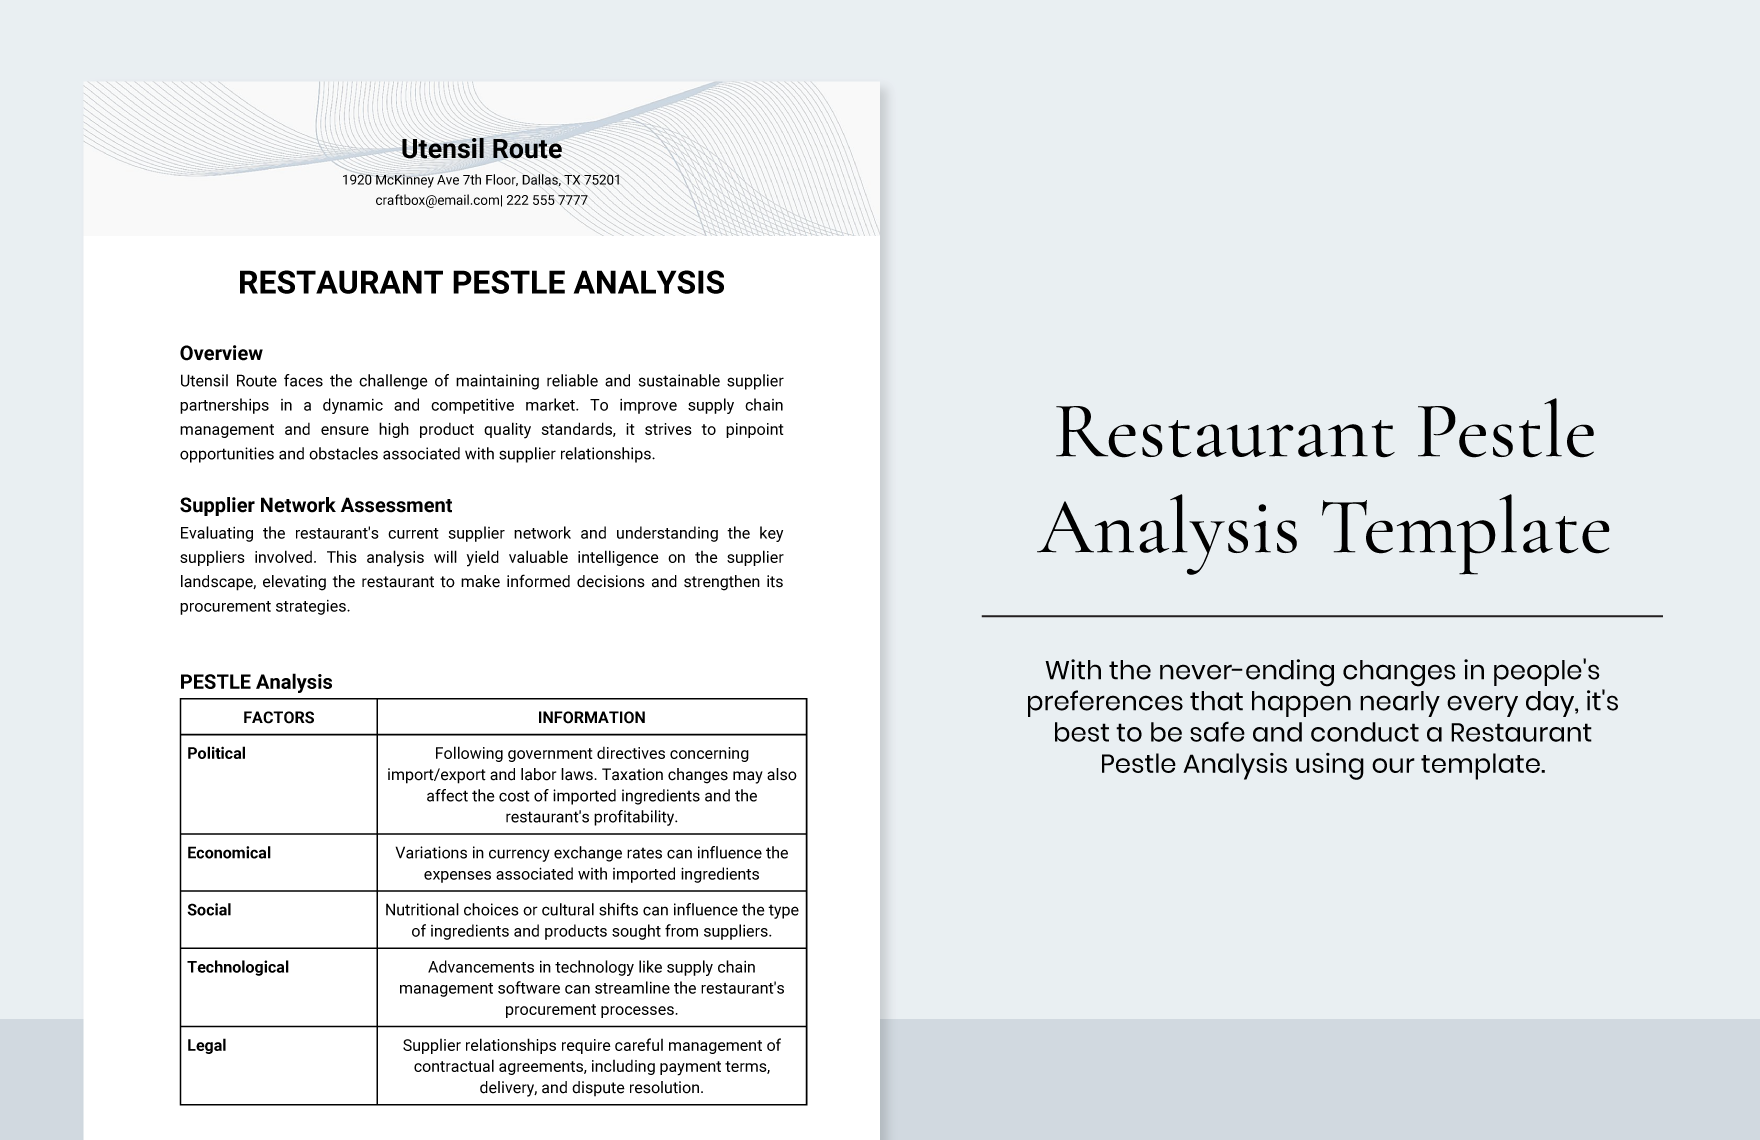 Restaurant Pestle Analysis Template